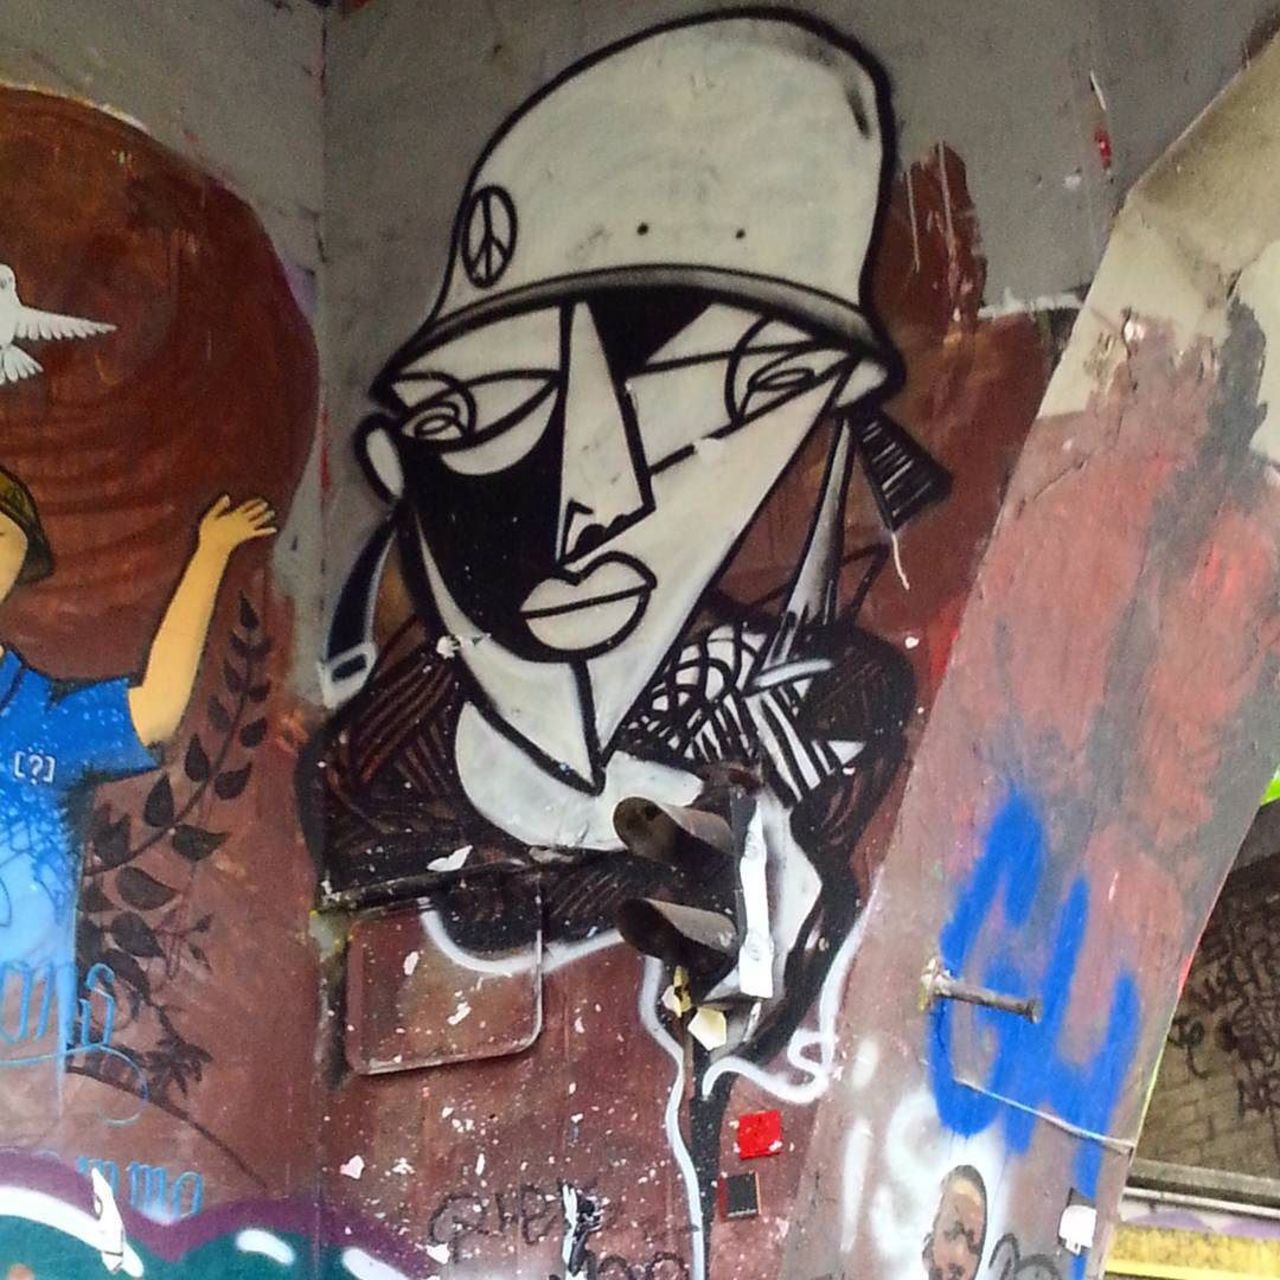 #Paris #graffiti photo by @fotoflaneuse http://ift.tt/1XsfRUW #StreetArt https://t.co/H2maVtM0nB